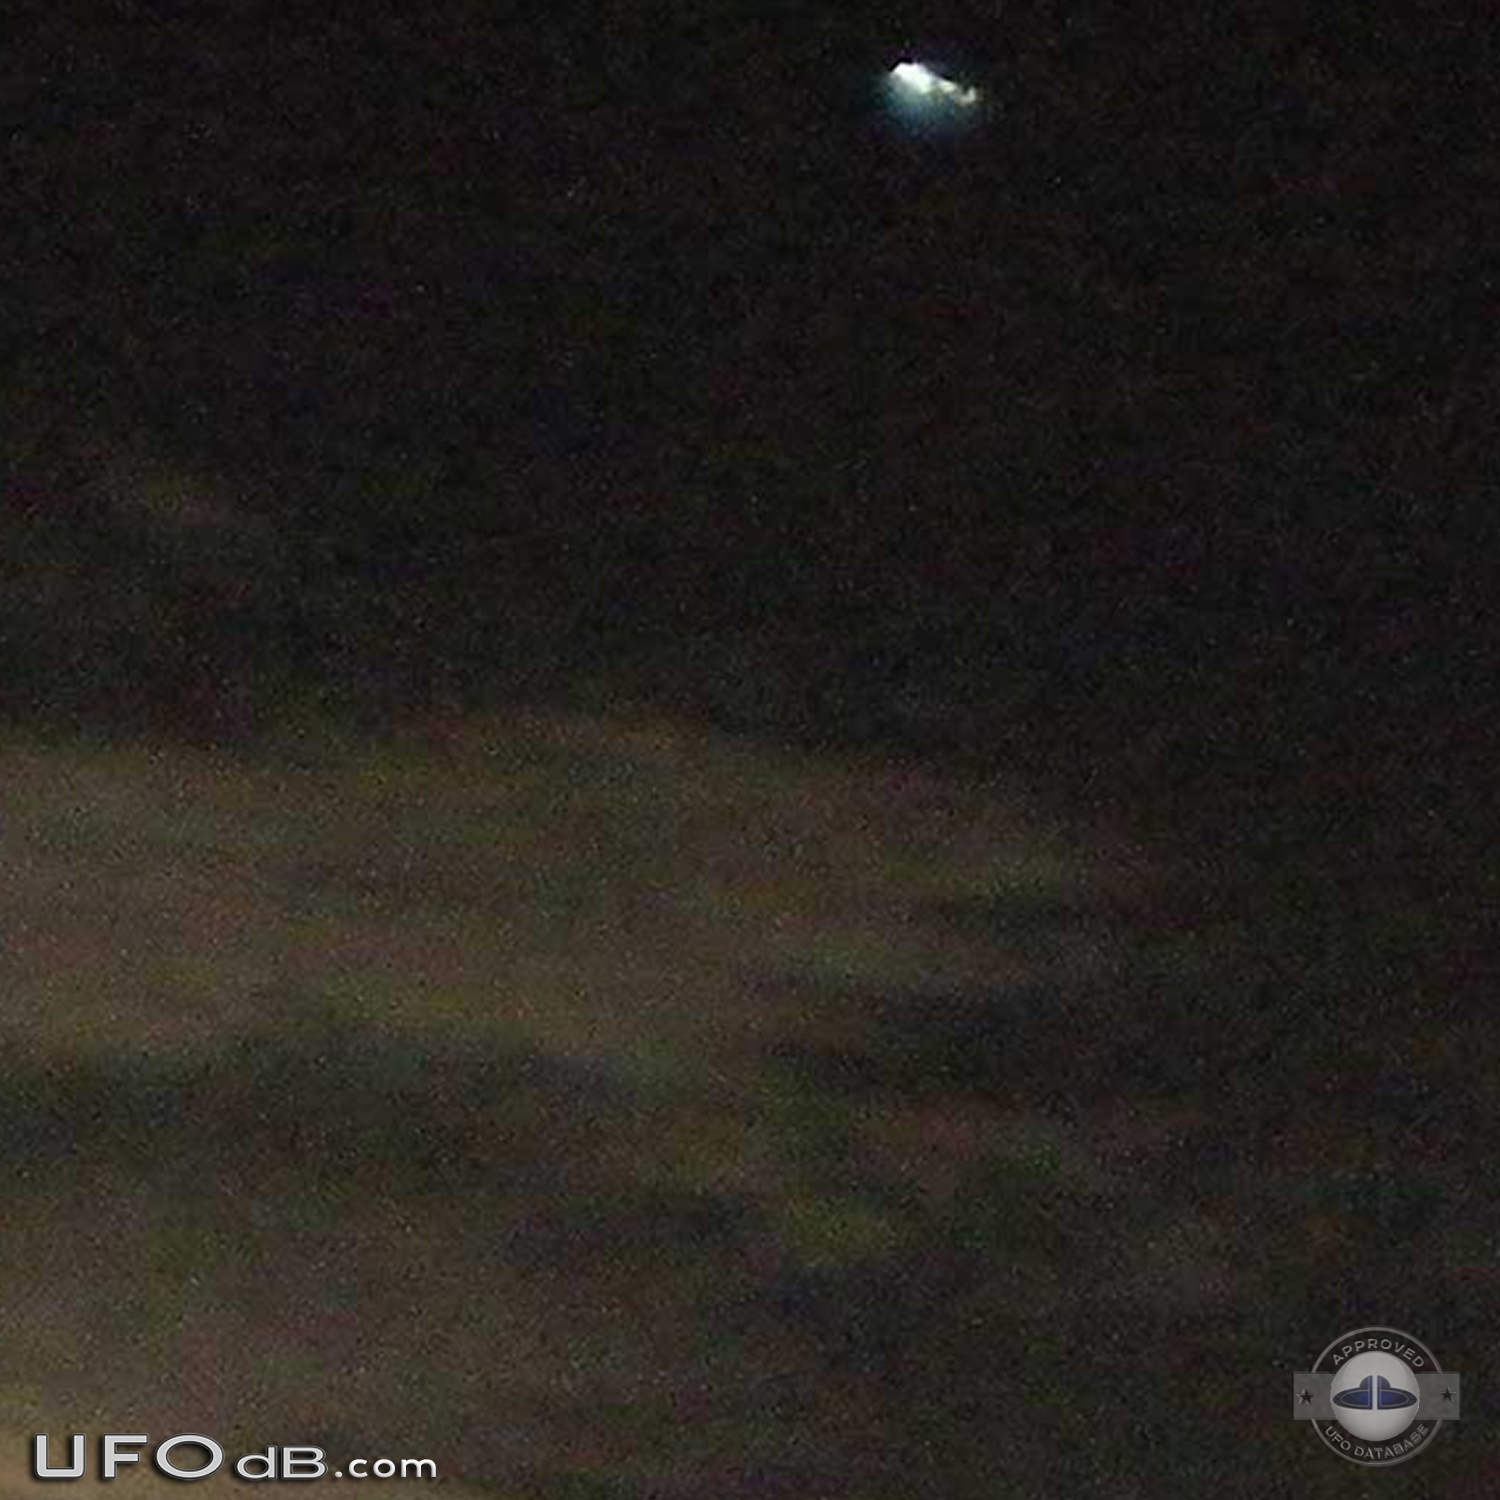 Moon picture reveals bright UFO in the night sky in Ecuador in 2009 UFO Picture #446-6